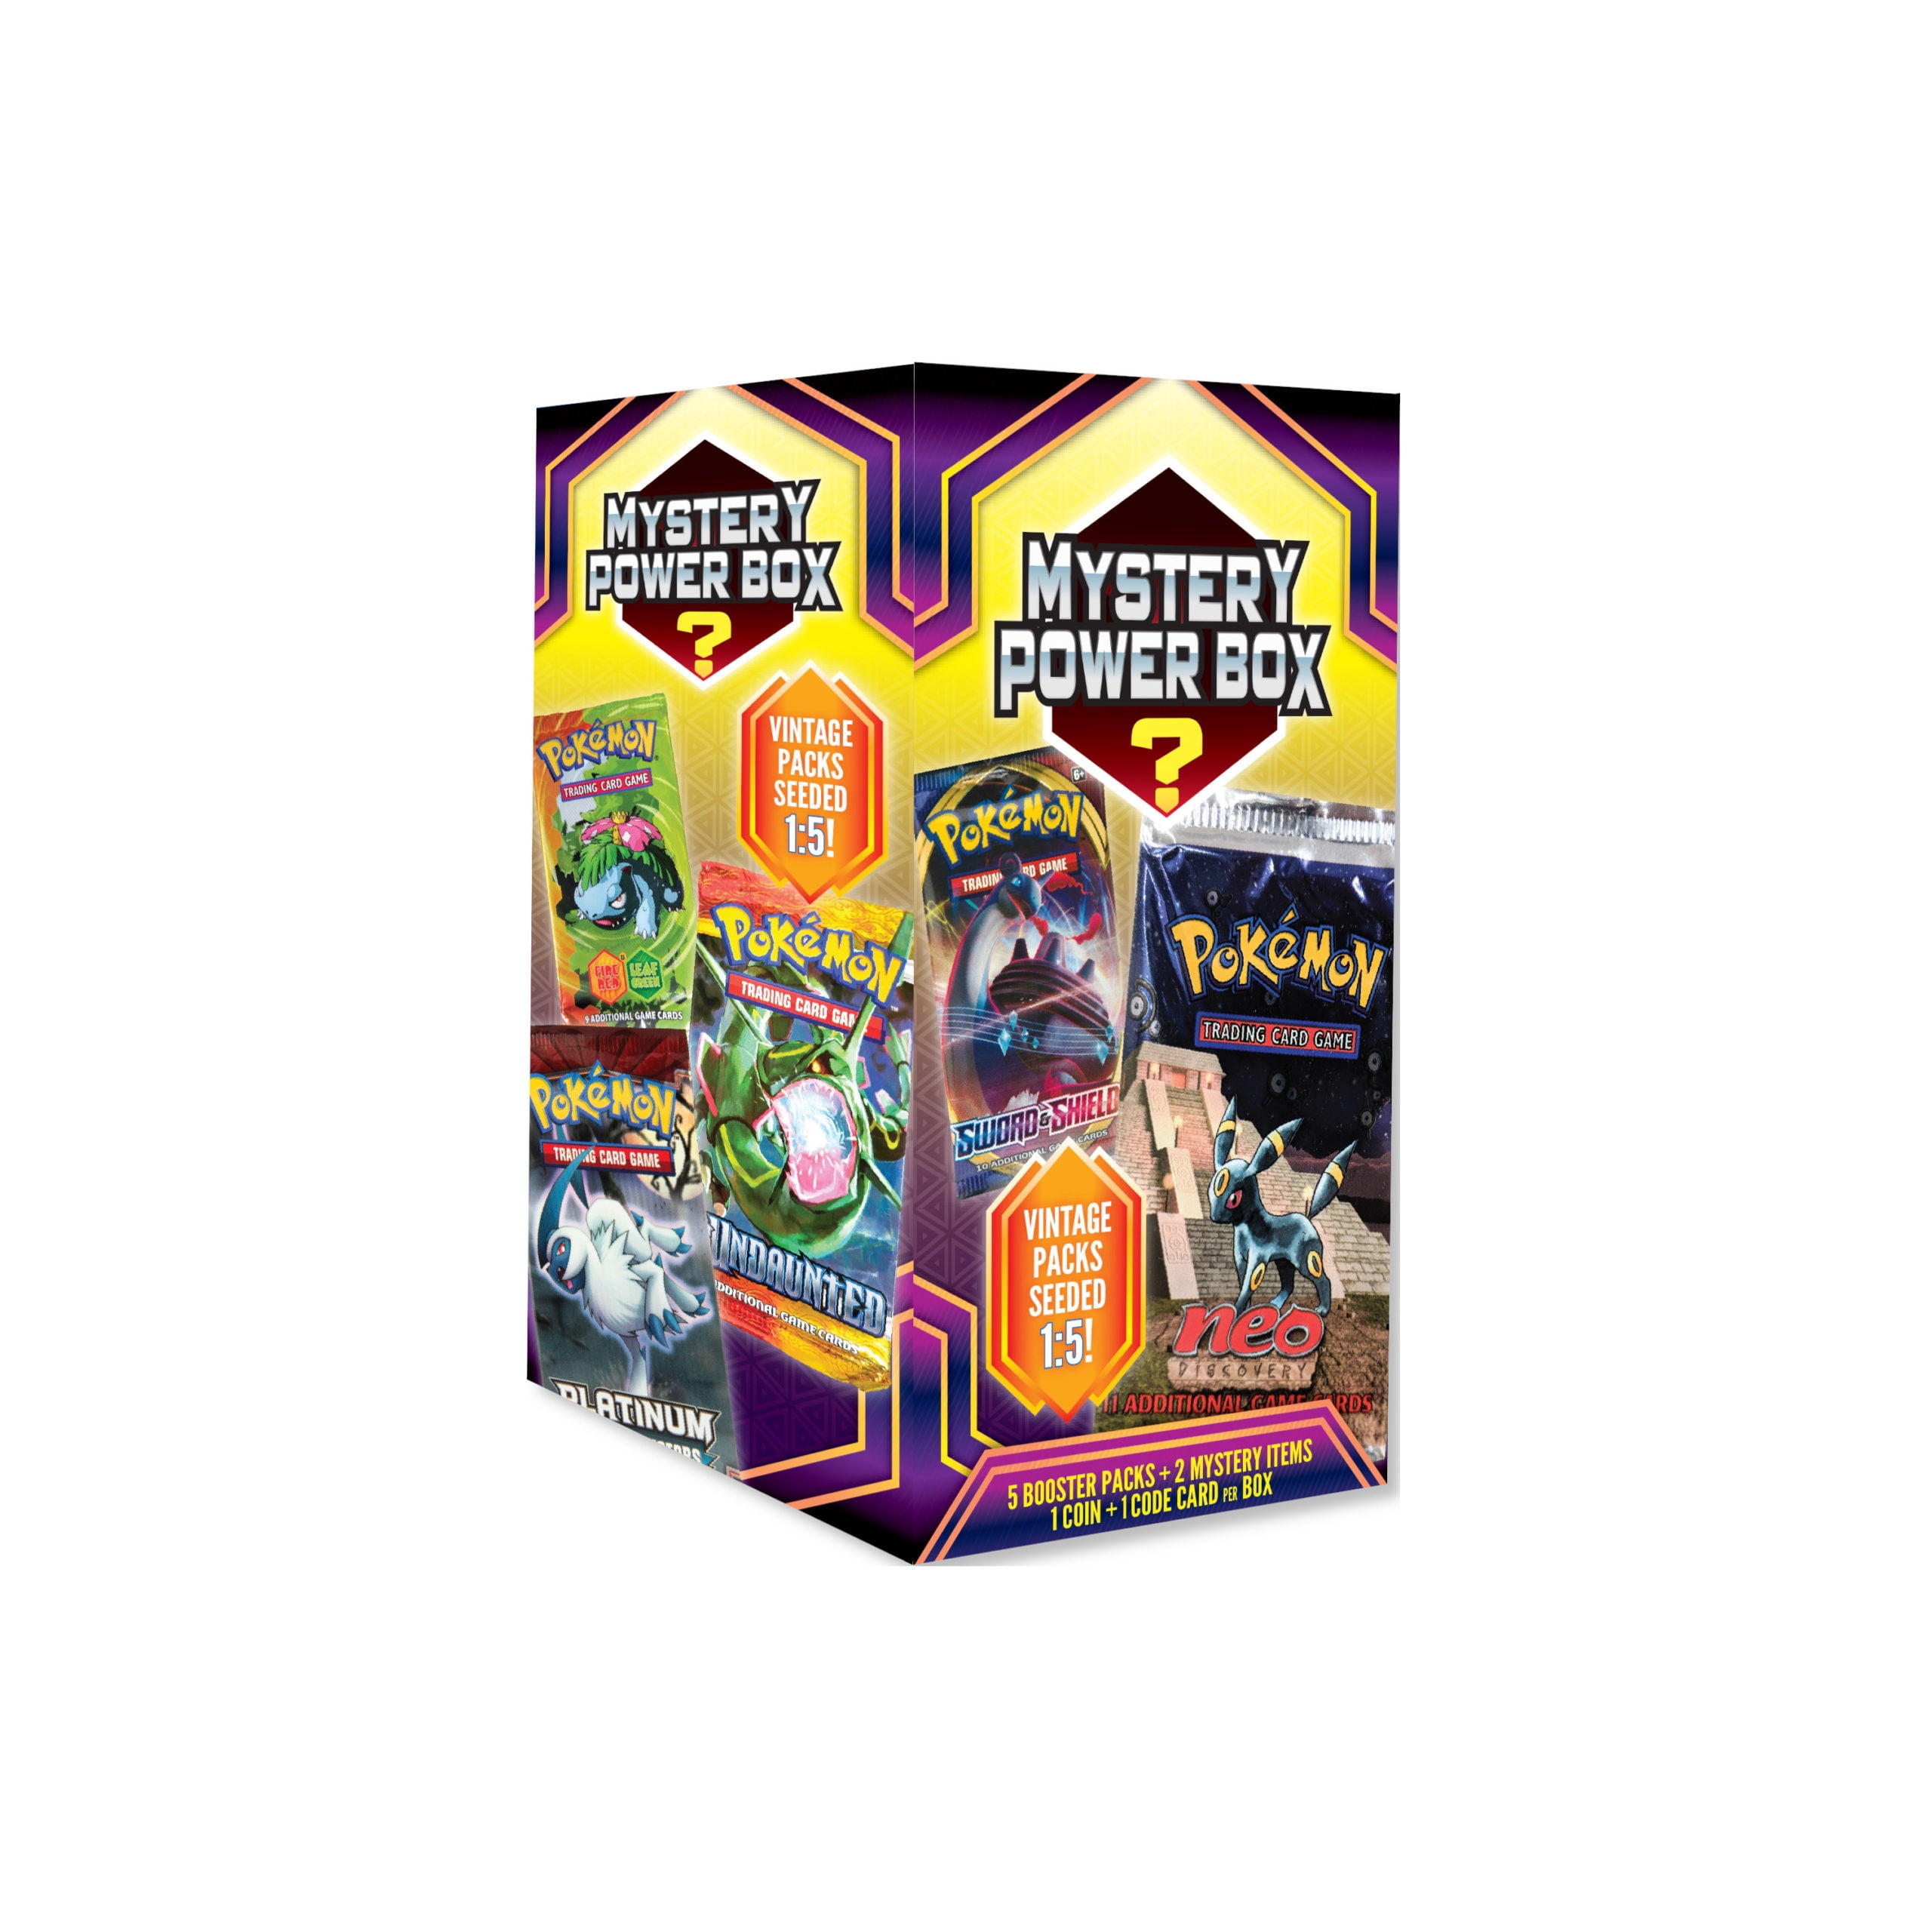 NEW Sealed! Pokemon Mystery Box 5 Booster Packs Vintage Packs Seeded 1:5 